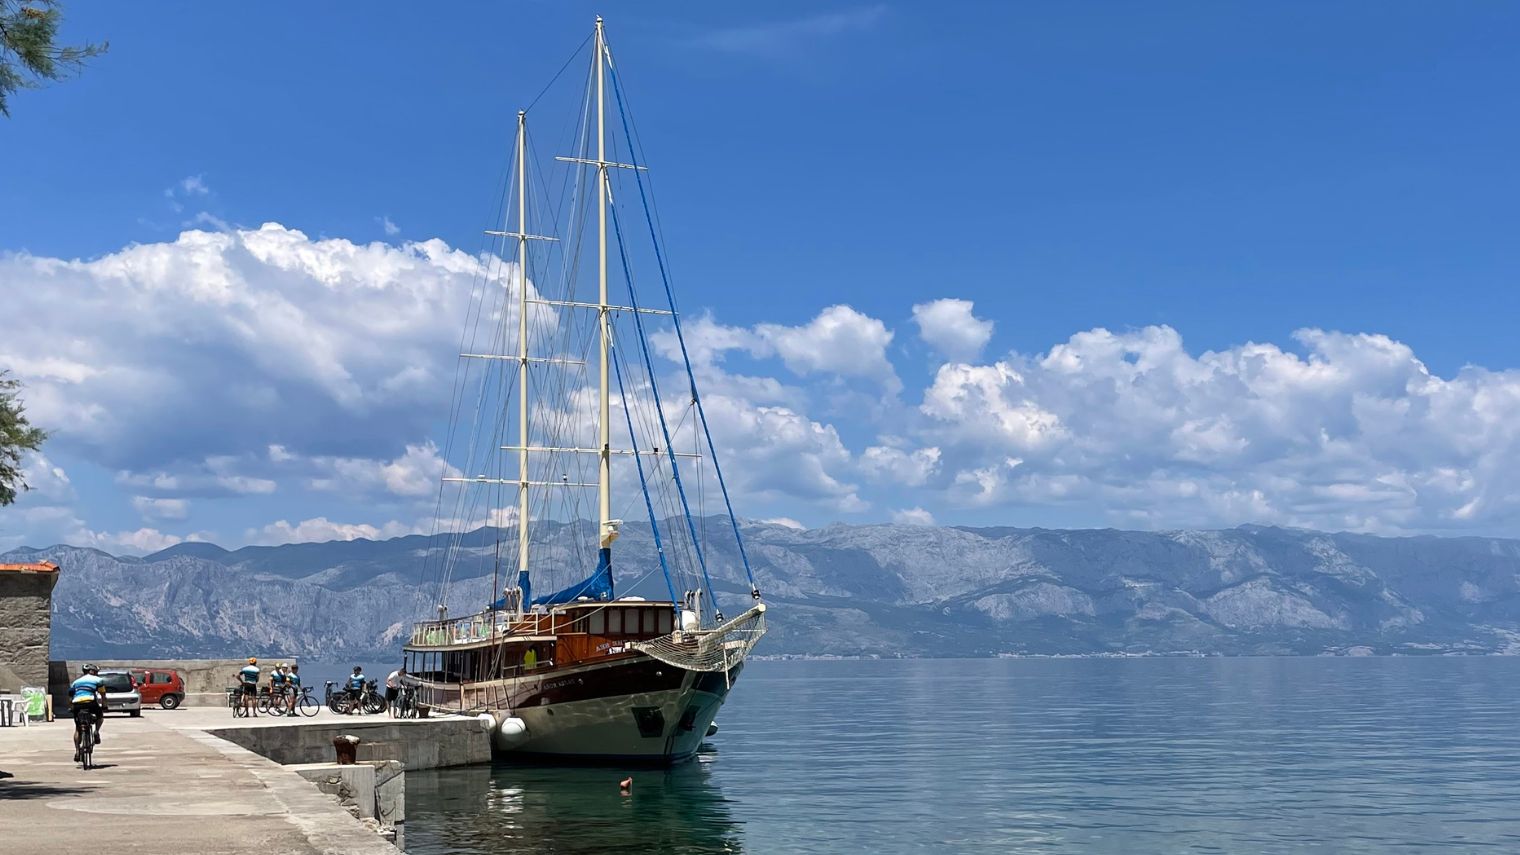 Explore Croatia's Dalmatian Islands by bike and boat